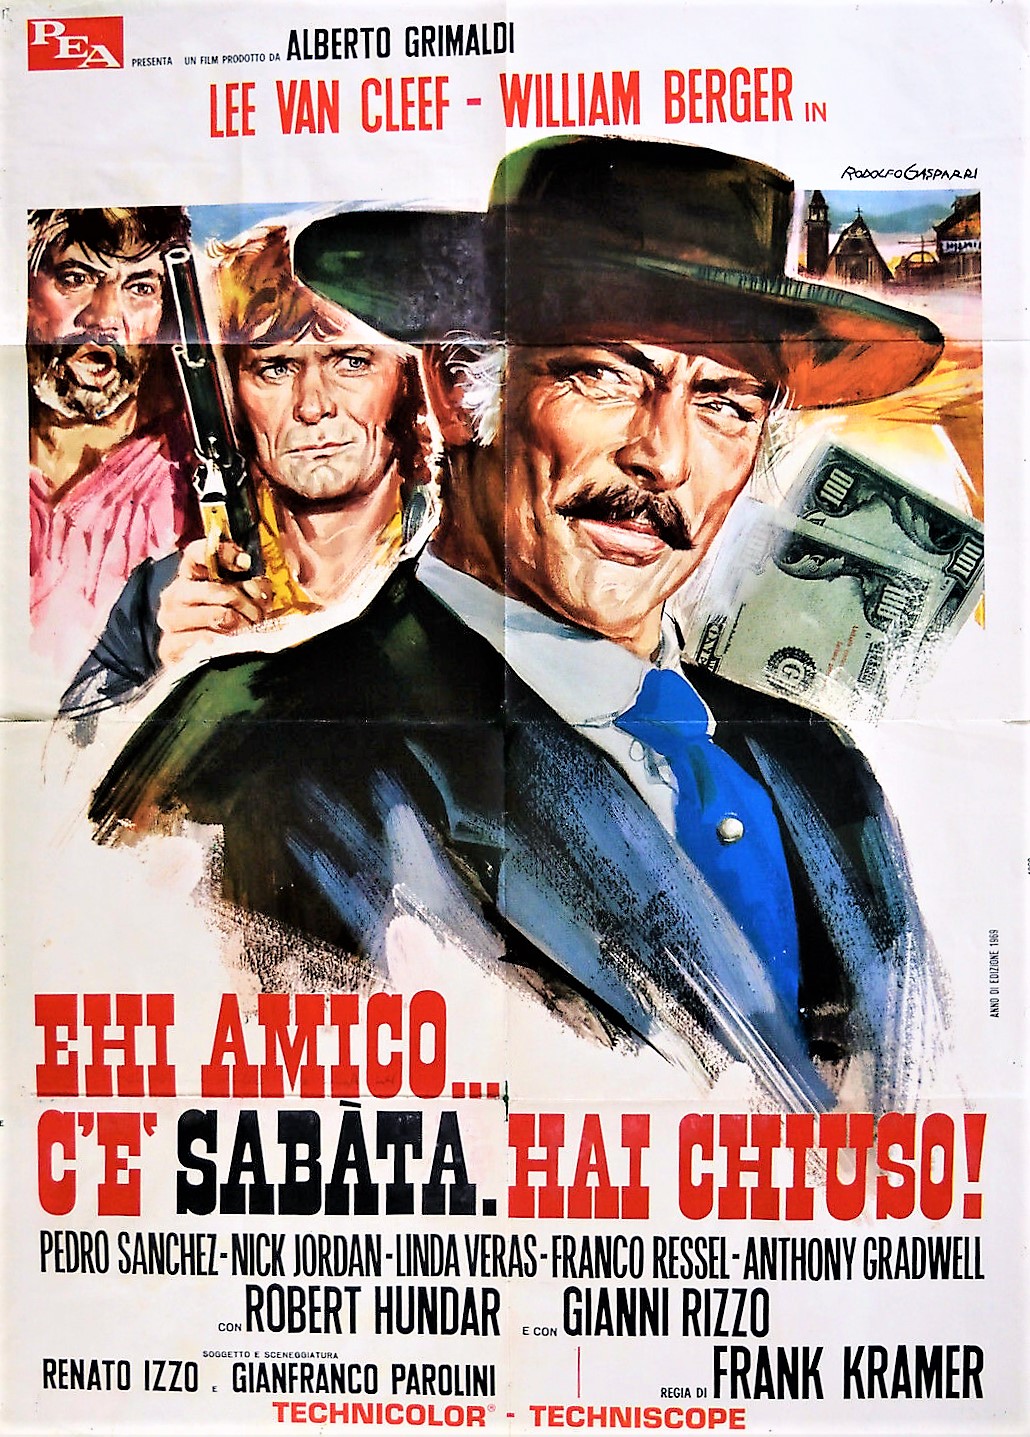 Sabata movie poster